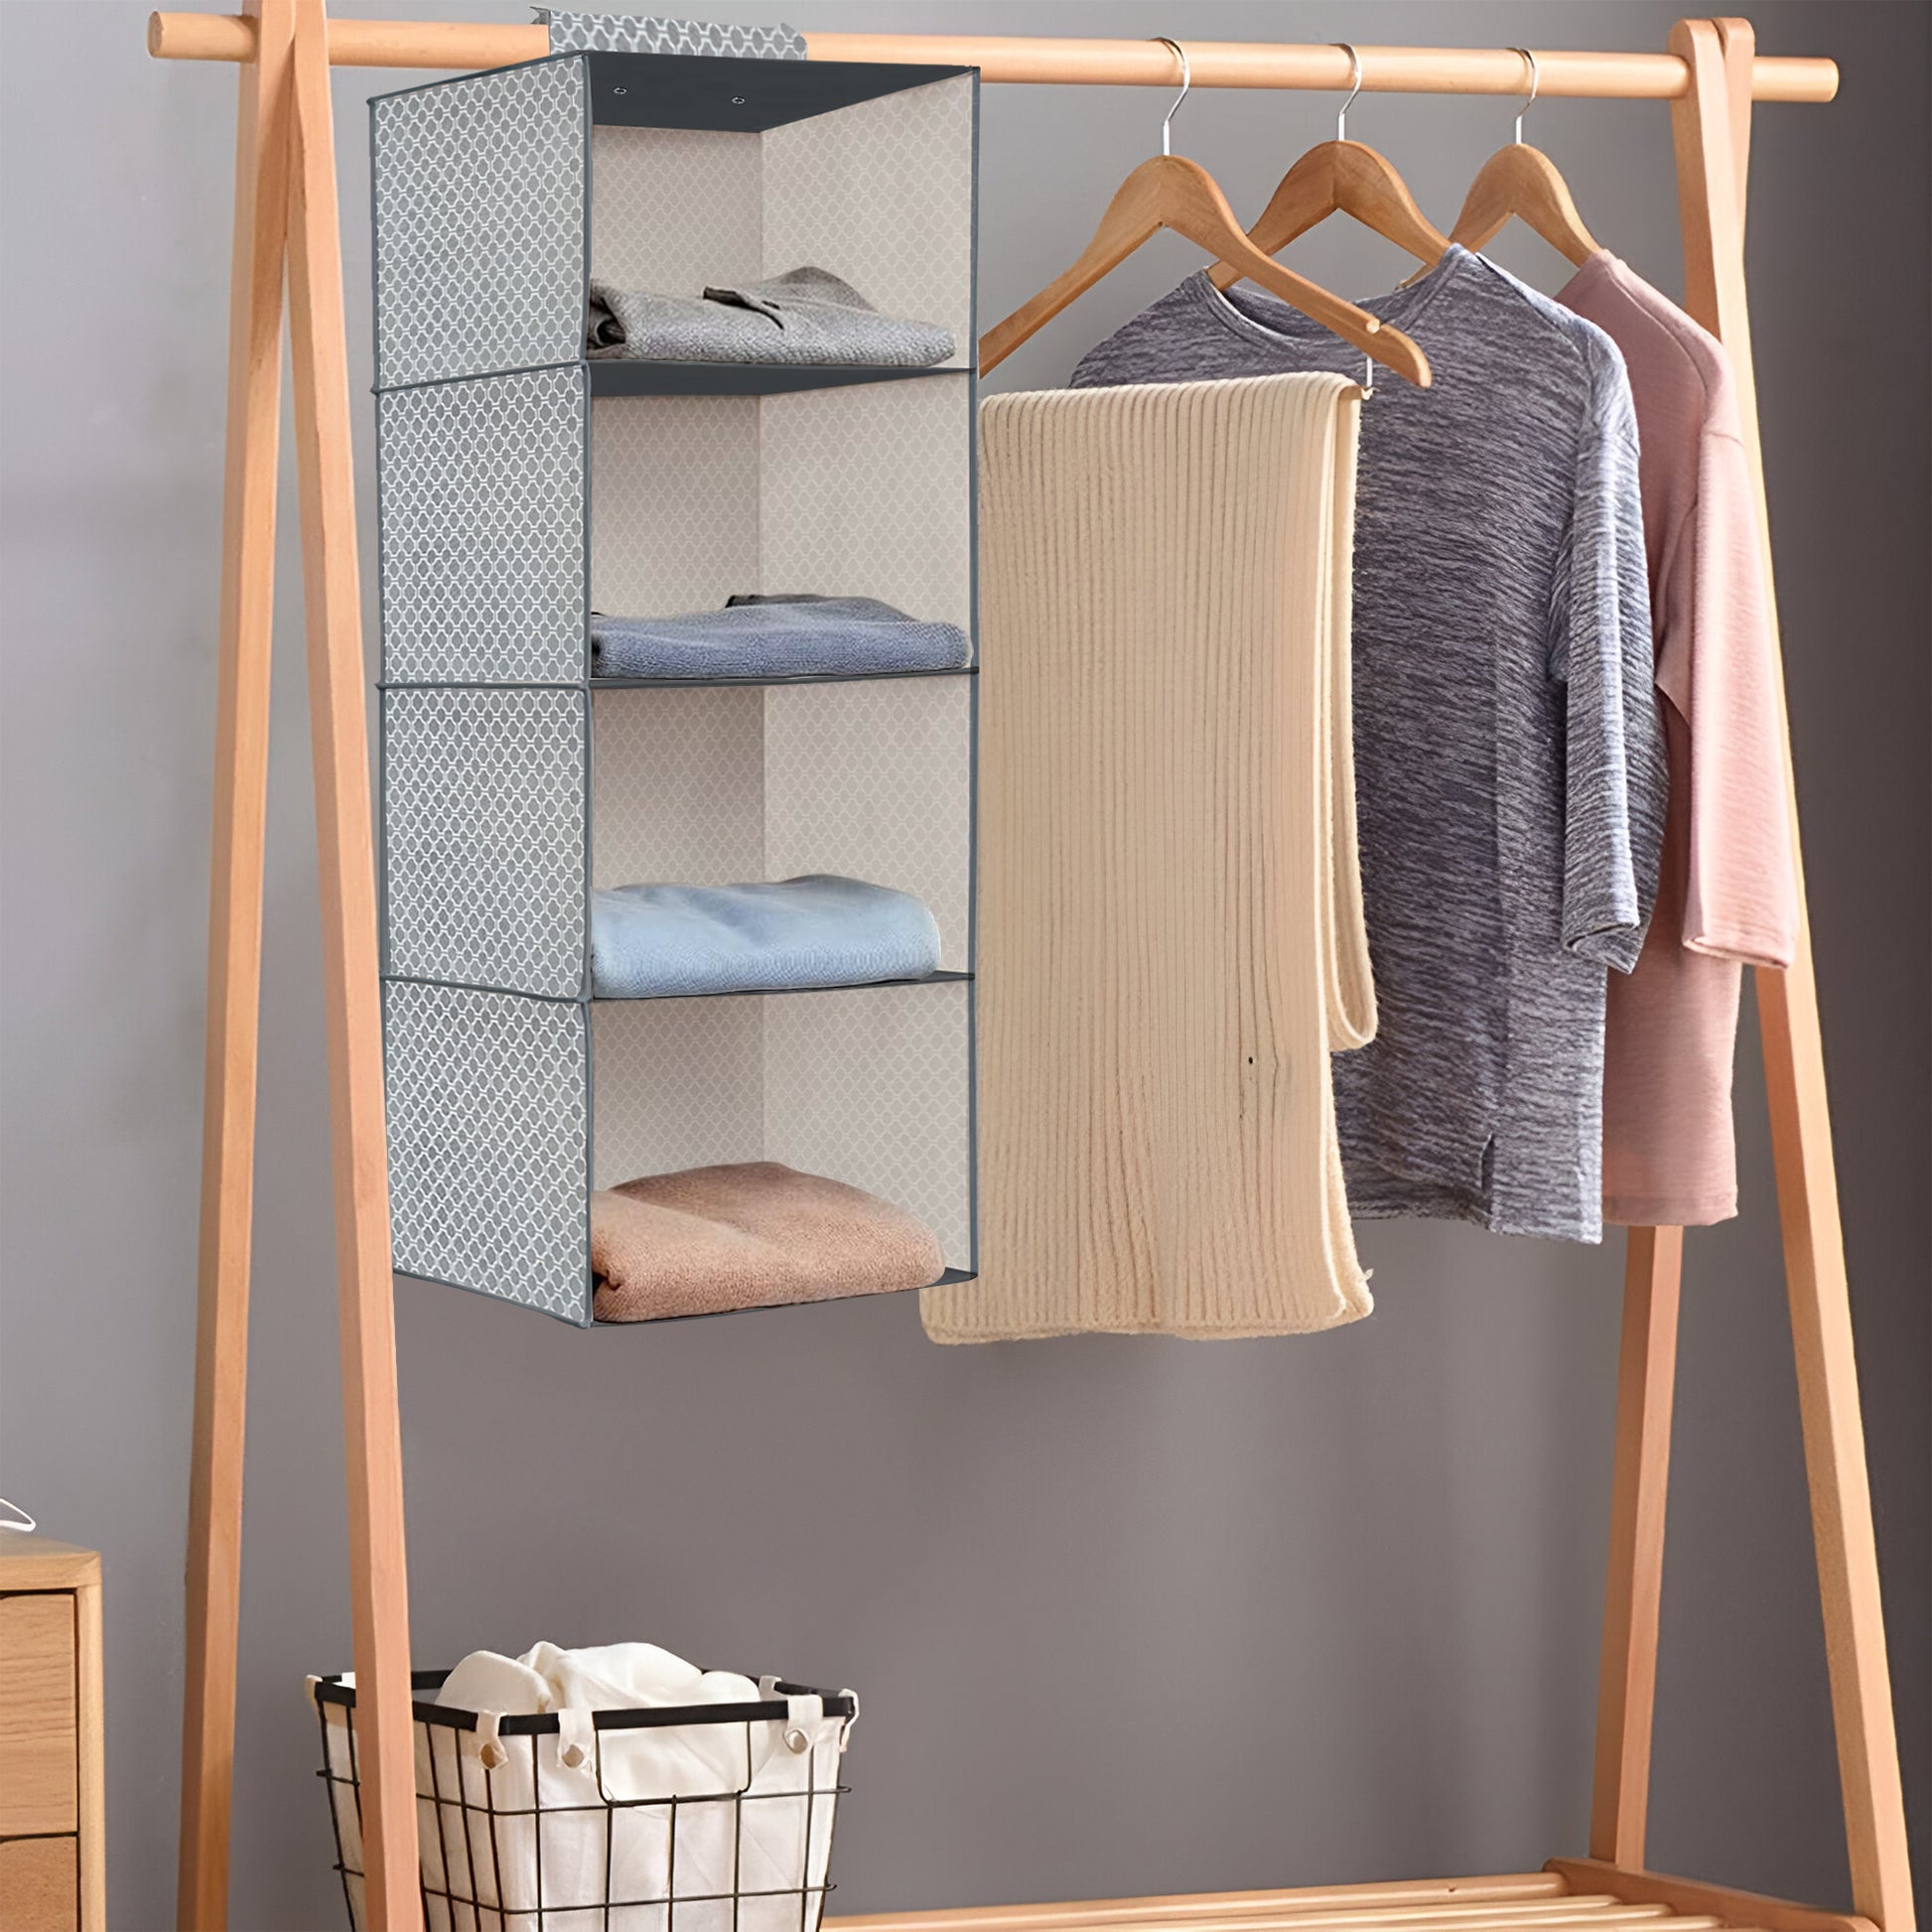 Fabric Hanging Storage with 5 shelf shelves Clothes Organizer ~5328